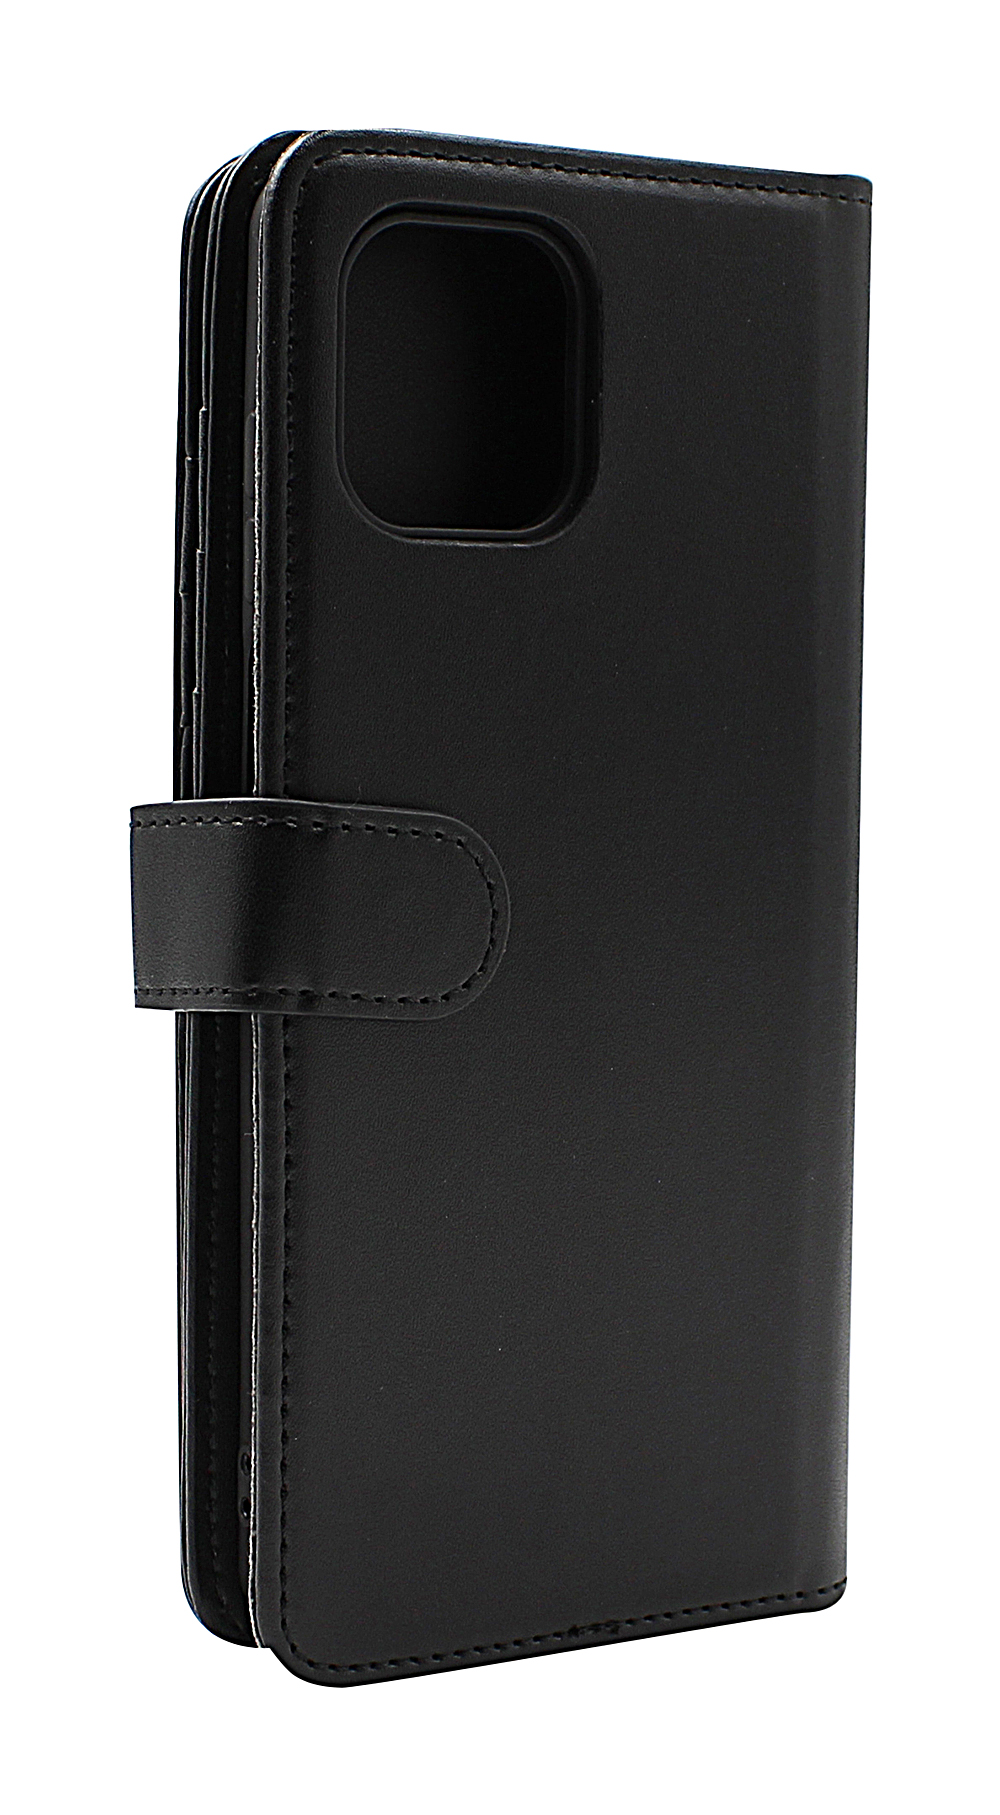 CoverIn Skimblocker XL Wallet Motorola Edge 20 Lite